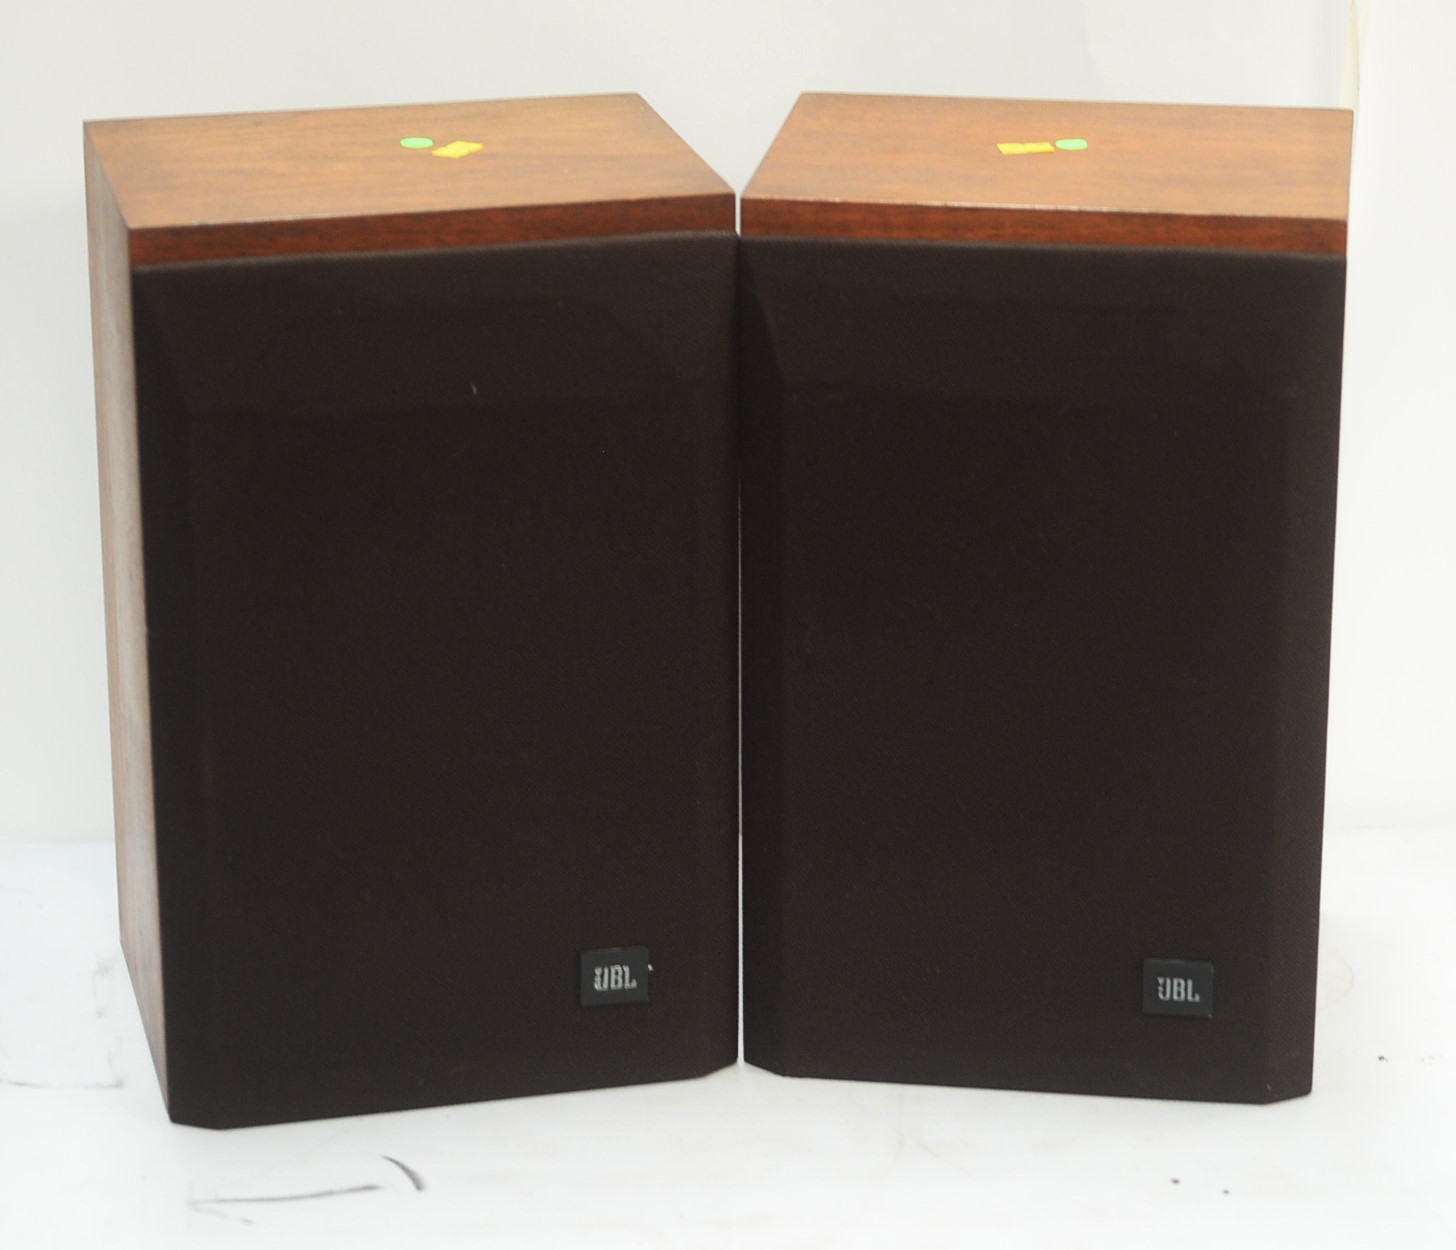 A pair of JBL L15 speakers